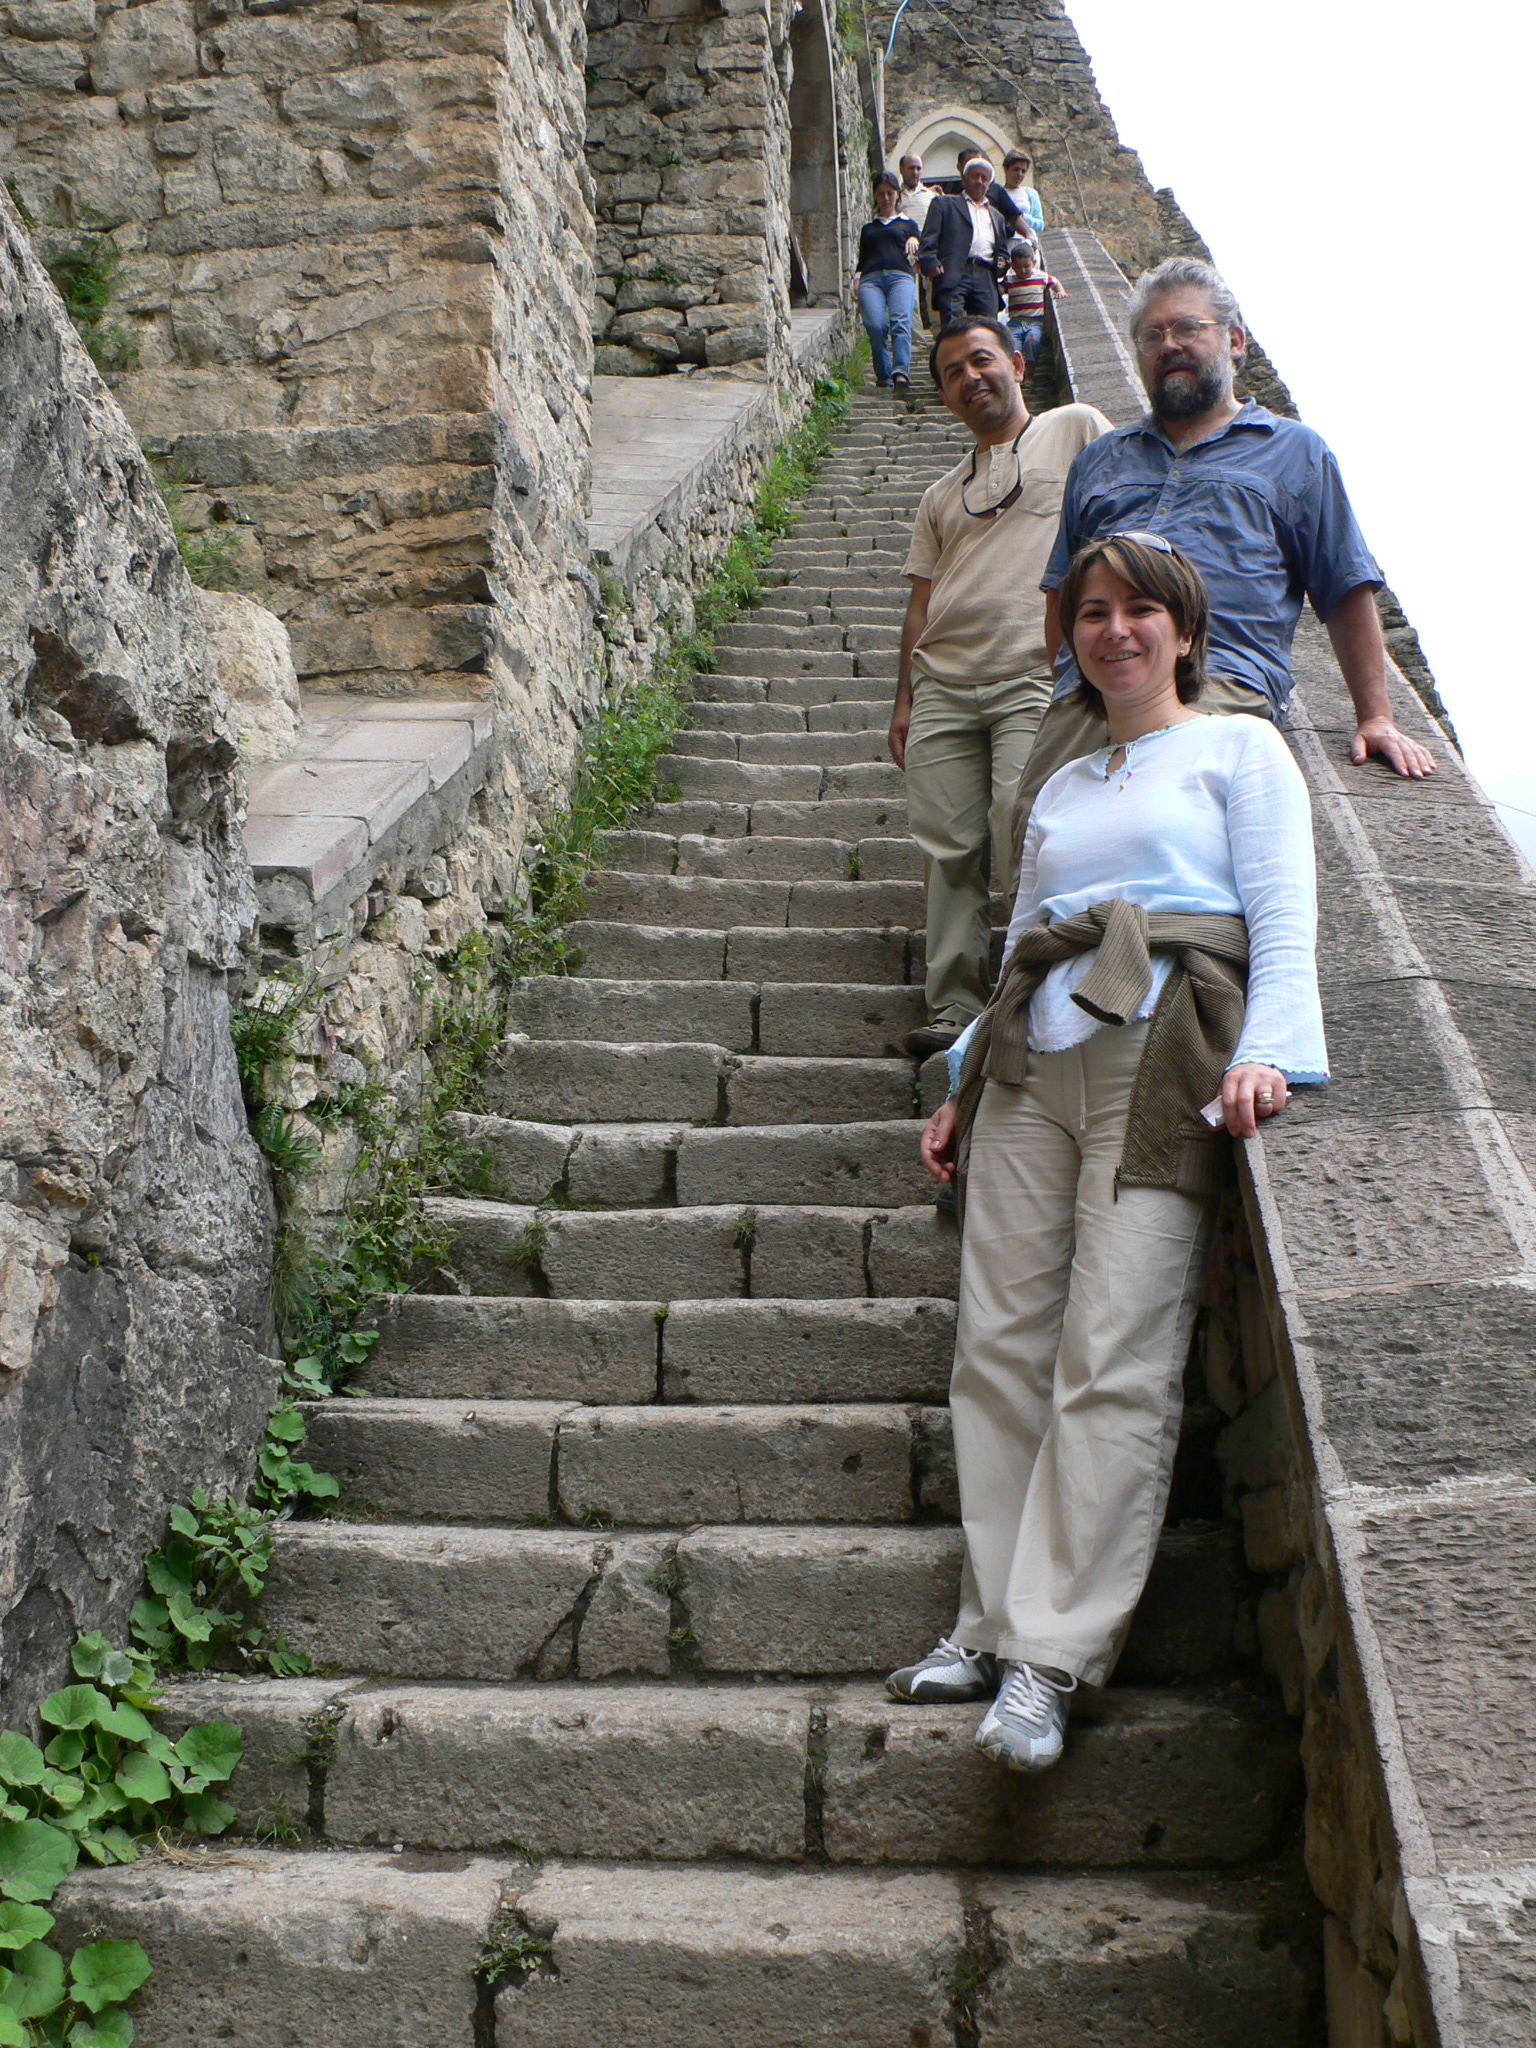 Steep staircase - entrance to monasteryMocka